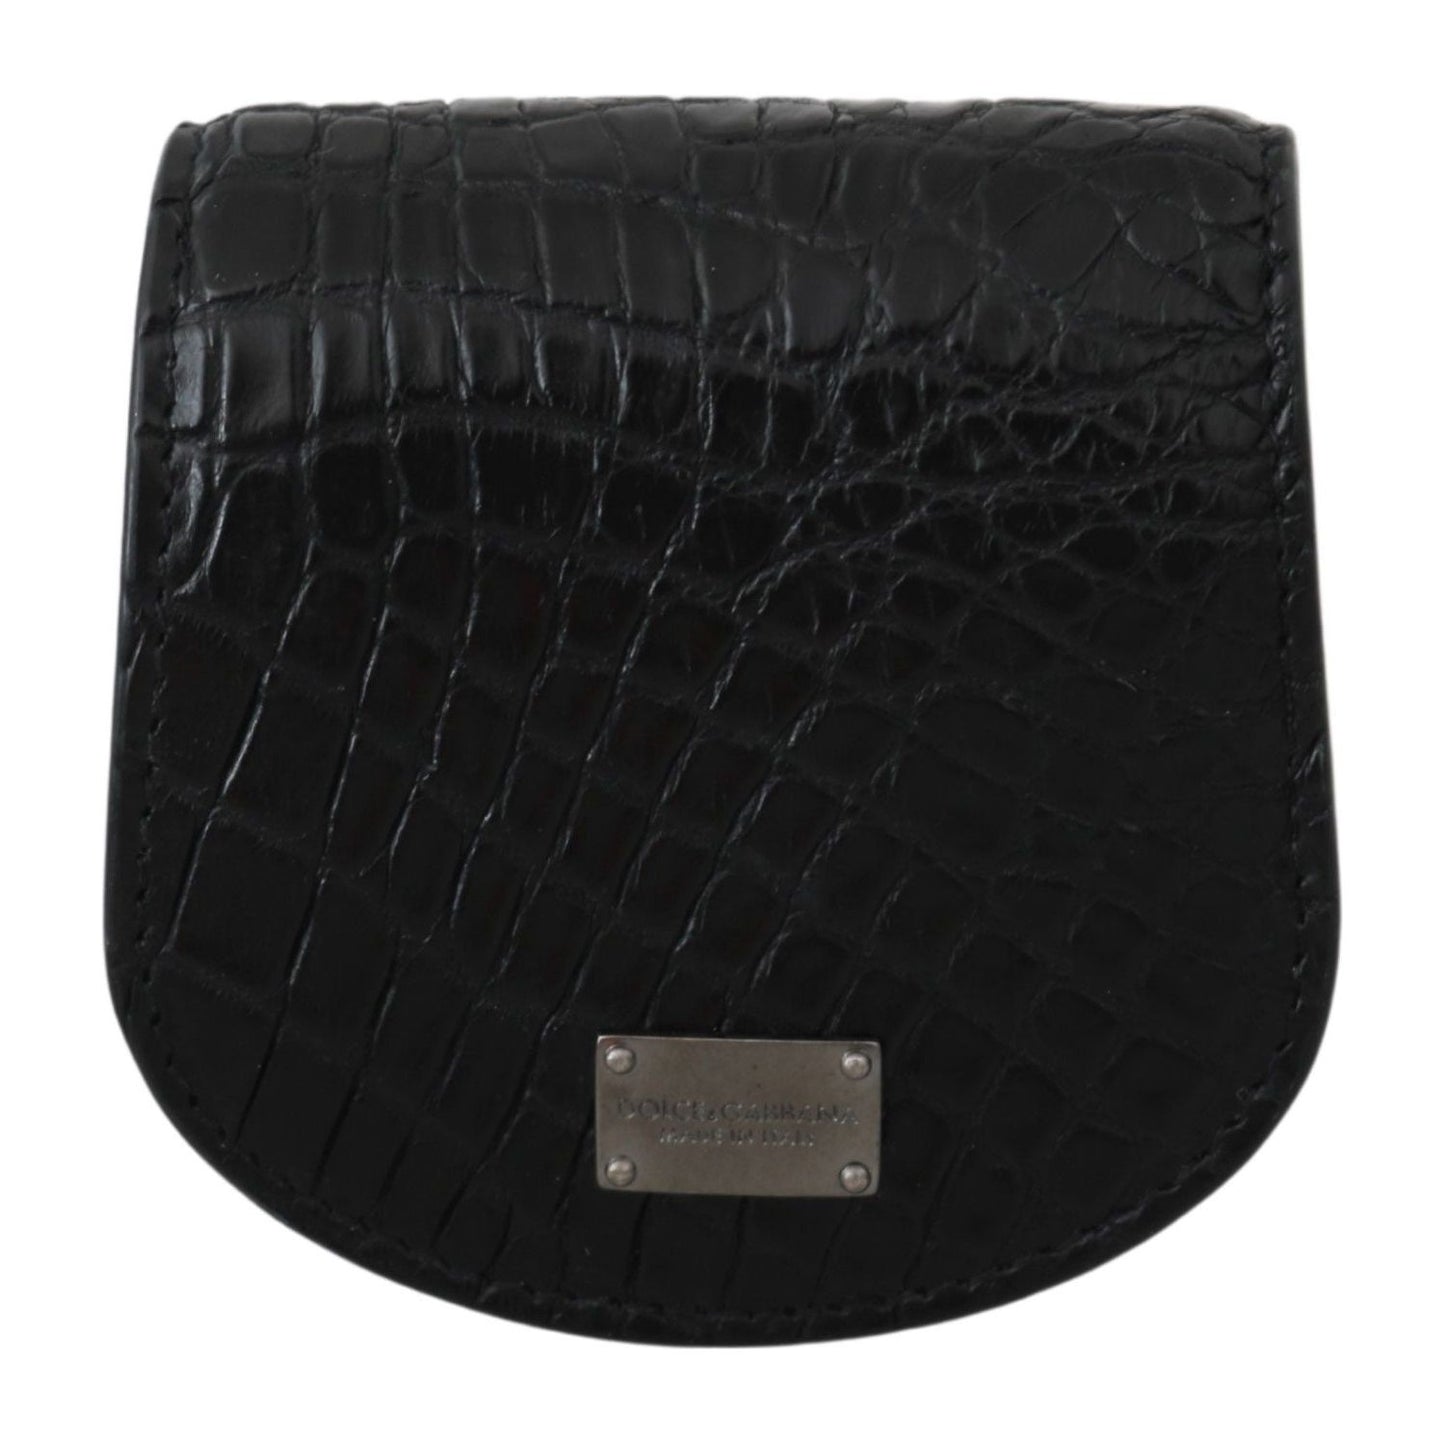 Dolce & Gabbana Sleek Black Leather Coin Case Wallet black-exotic-skin-pocket-condom-case-holder Condom Case IMG_0229-0a8e0684-7e6.jpg